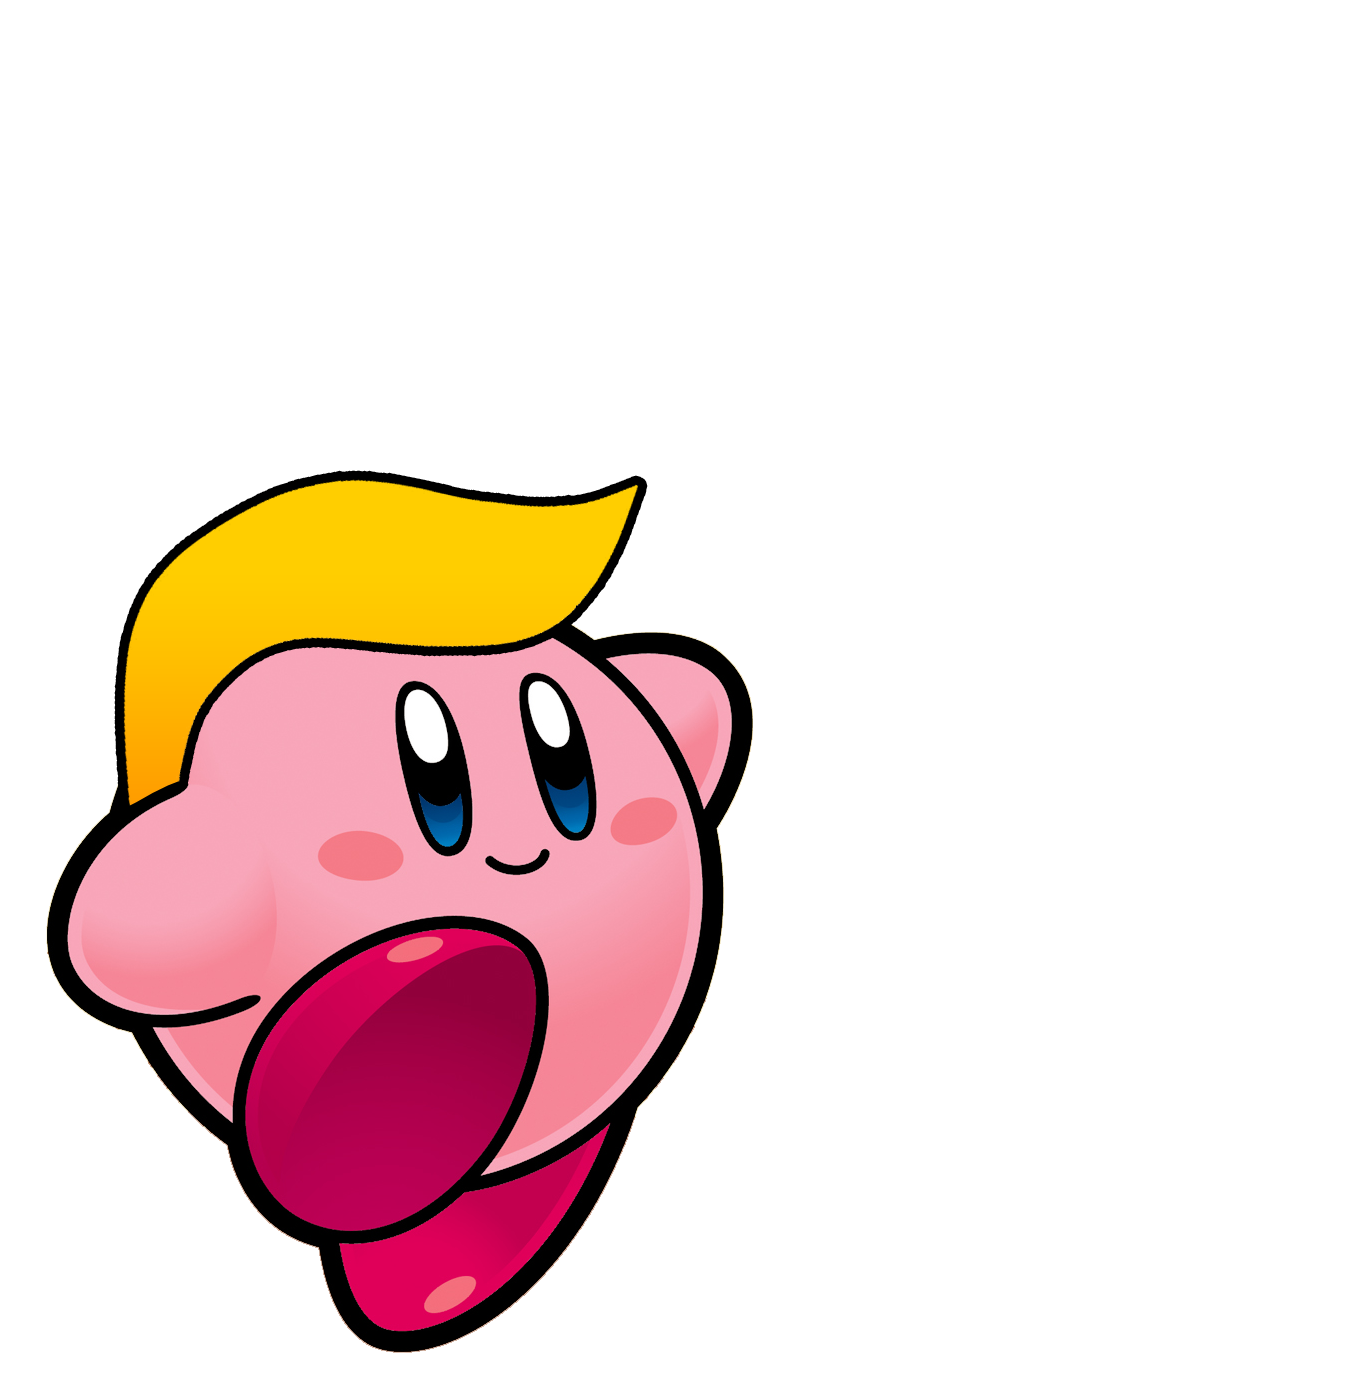 Kirby Trump